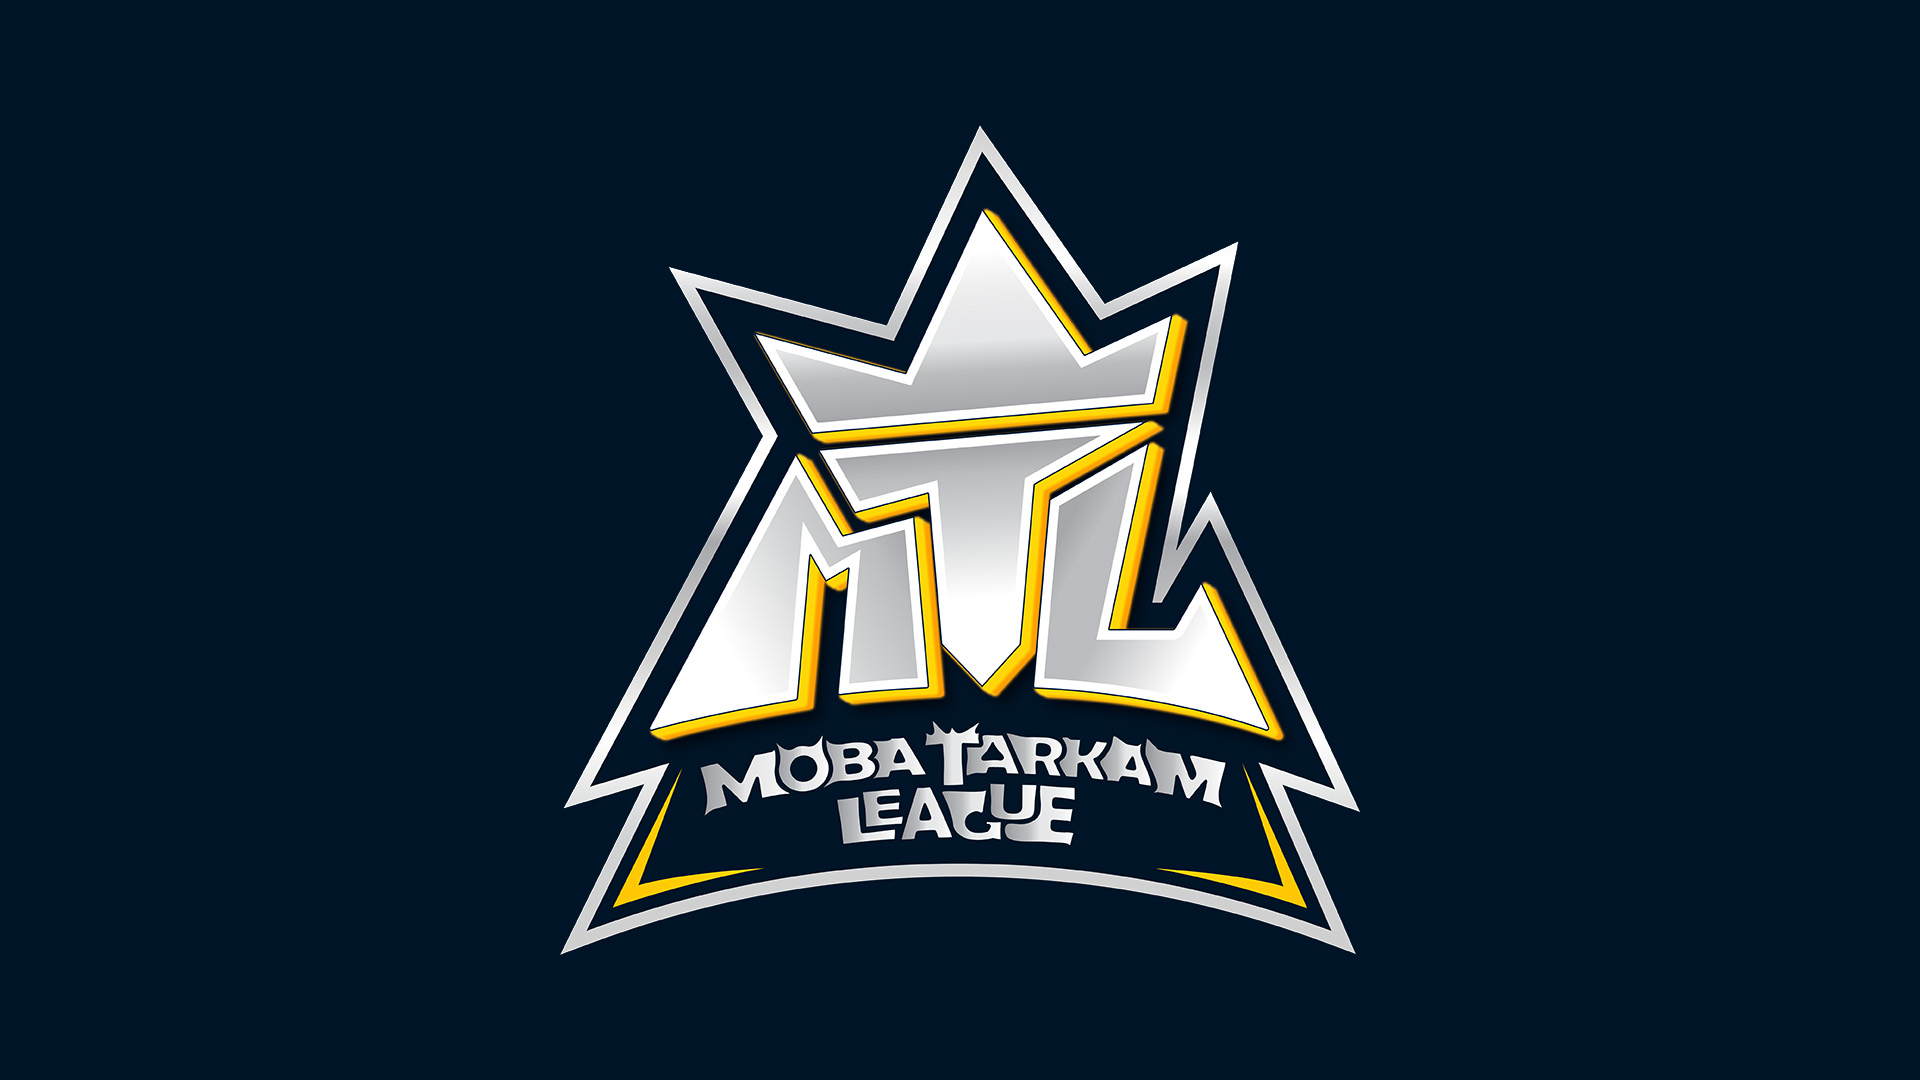 MTL Tournament Mobile Legends SEASON 1